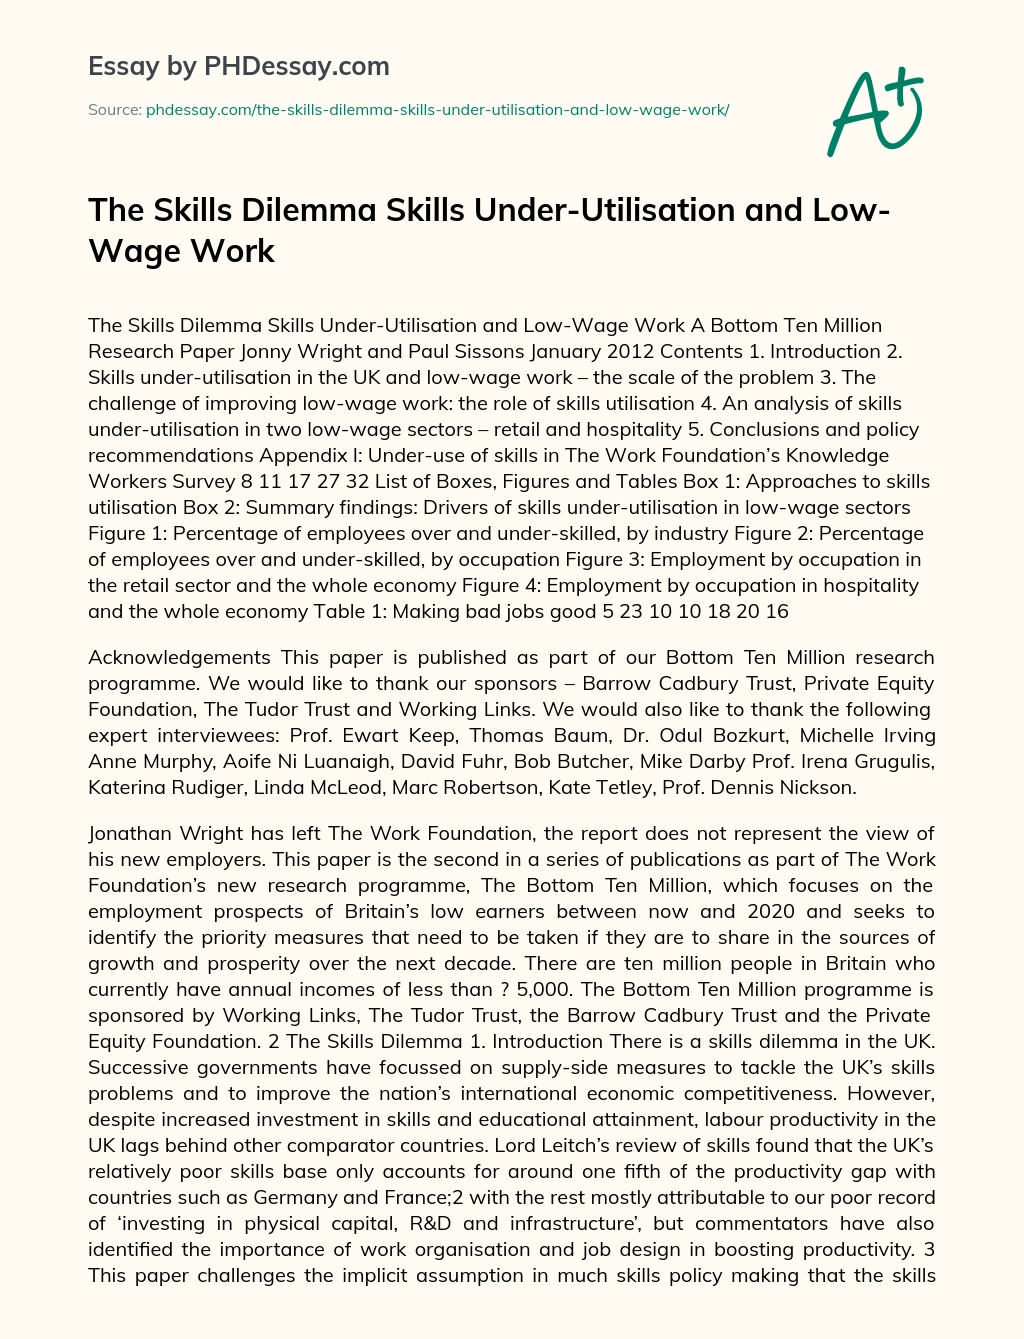 The Skills Dilemma Skills Under-Utilisation and Low-Wage Work essay